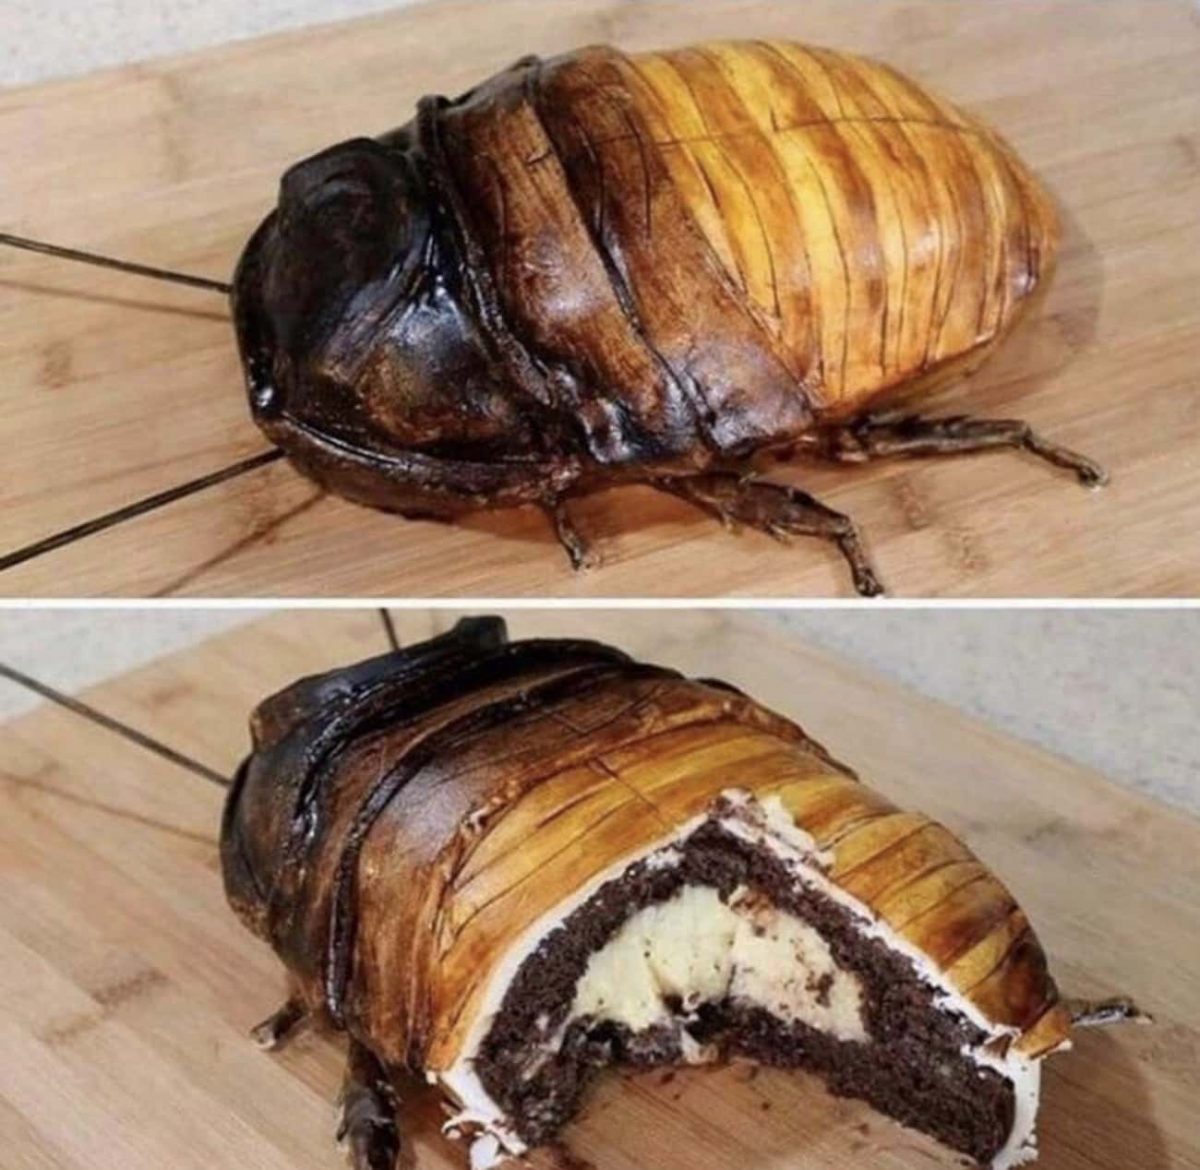 cockroach cake photo u1